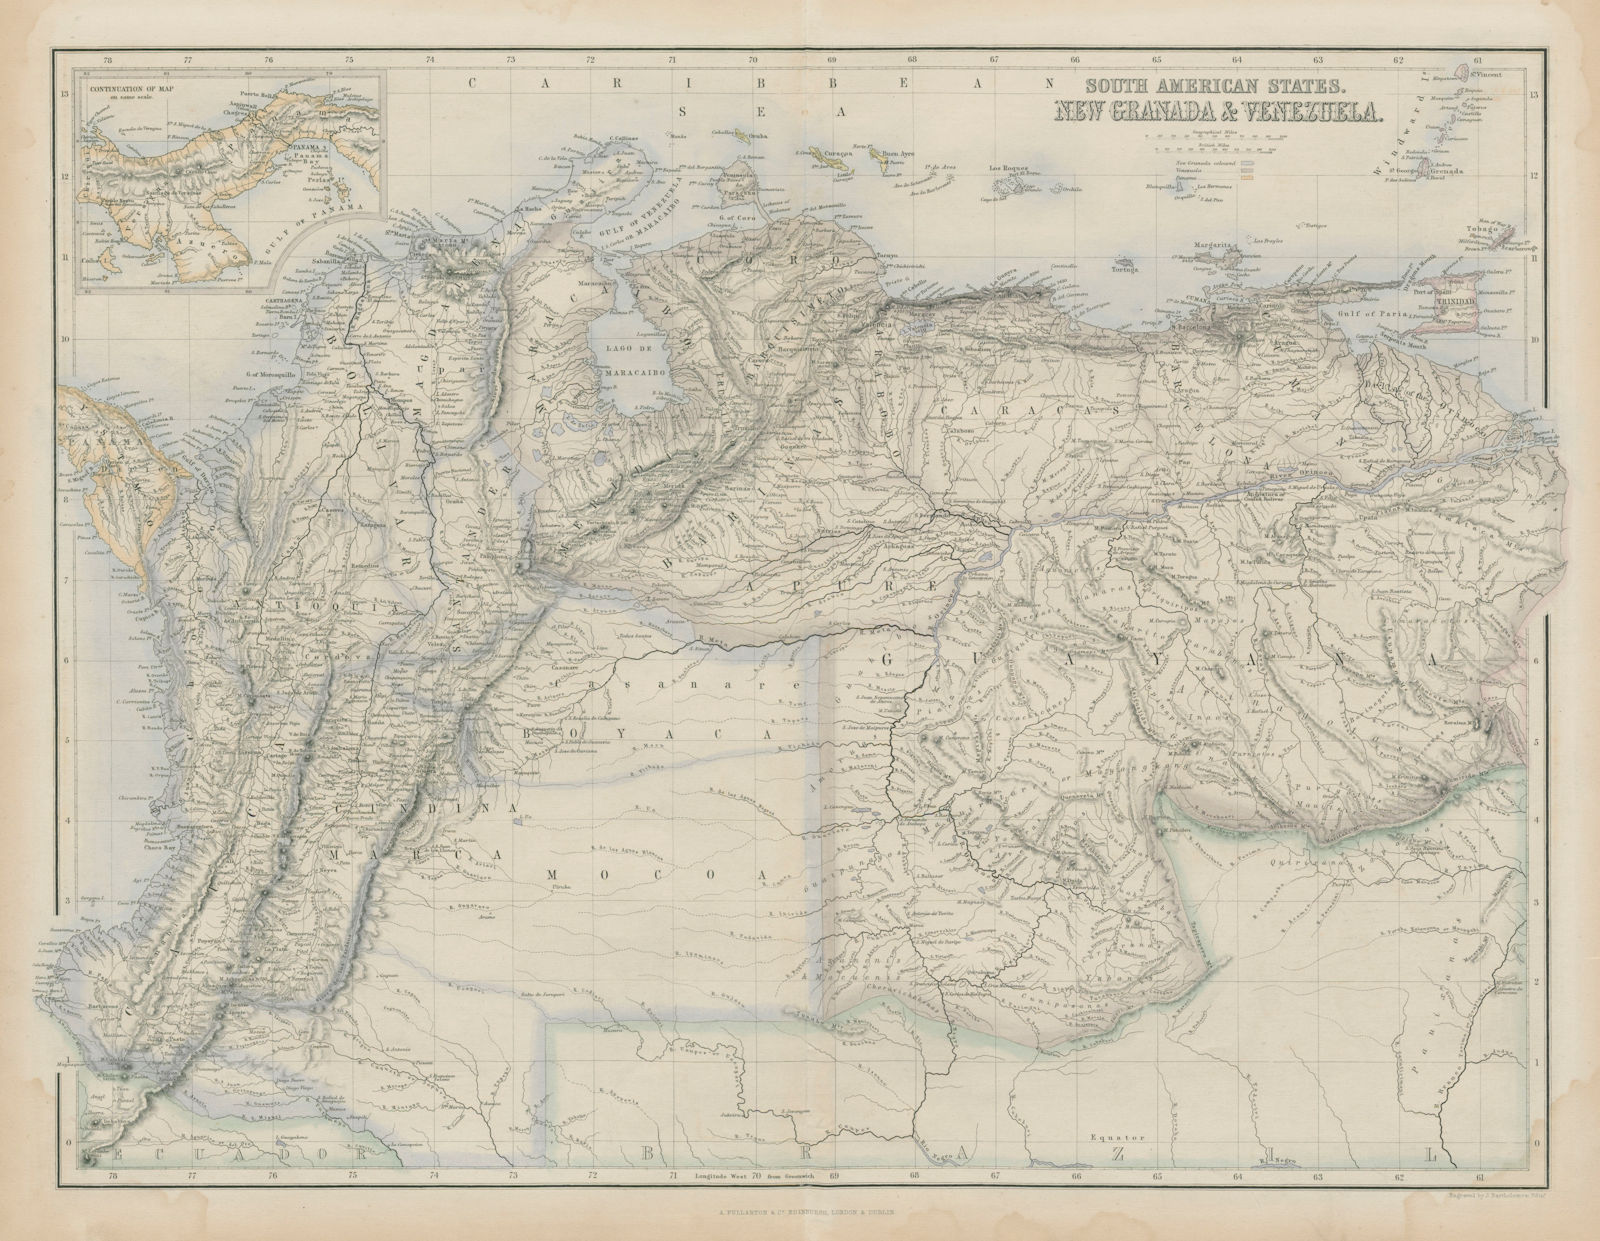 South America. New Granada & Venezuela. Colombia Panama. SWANSTON 1860 old map